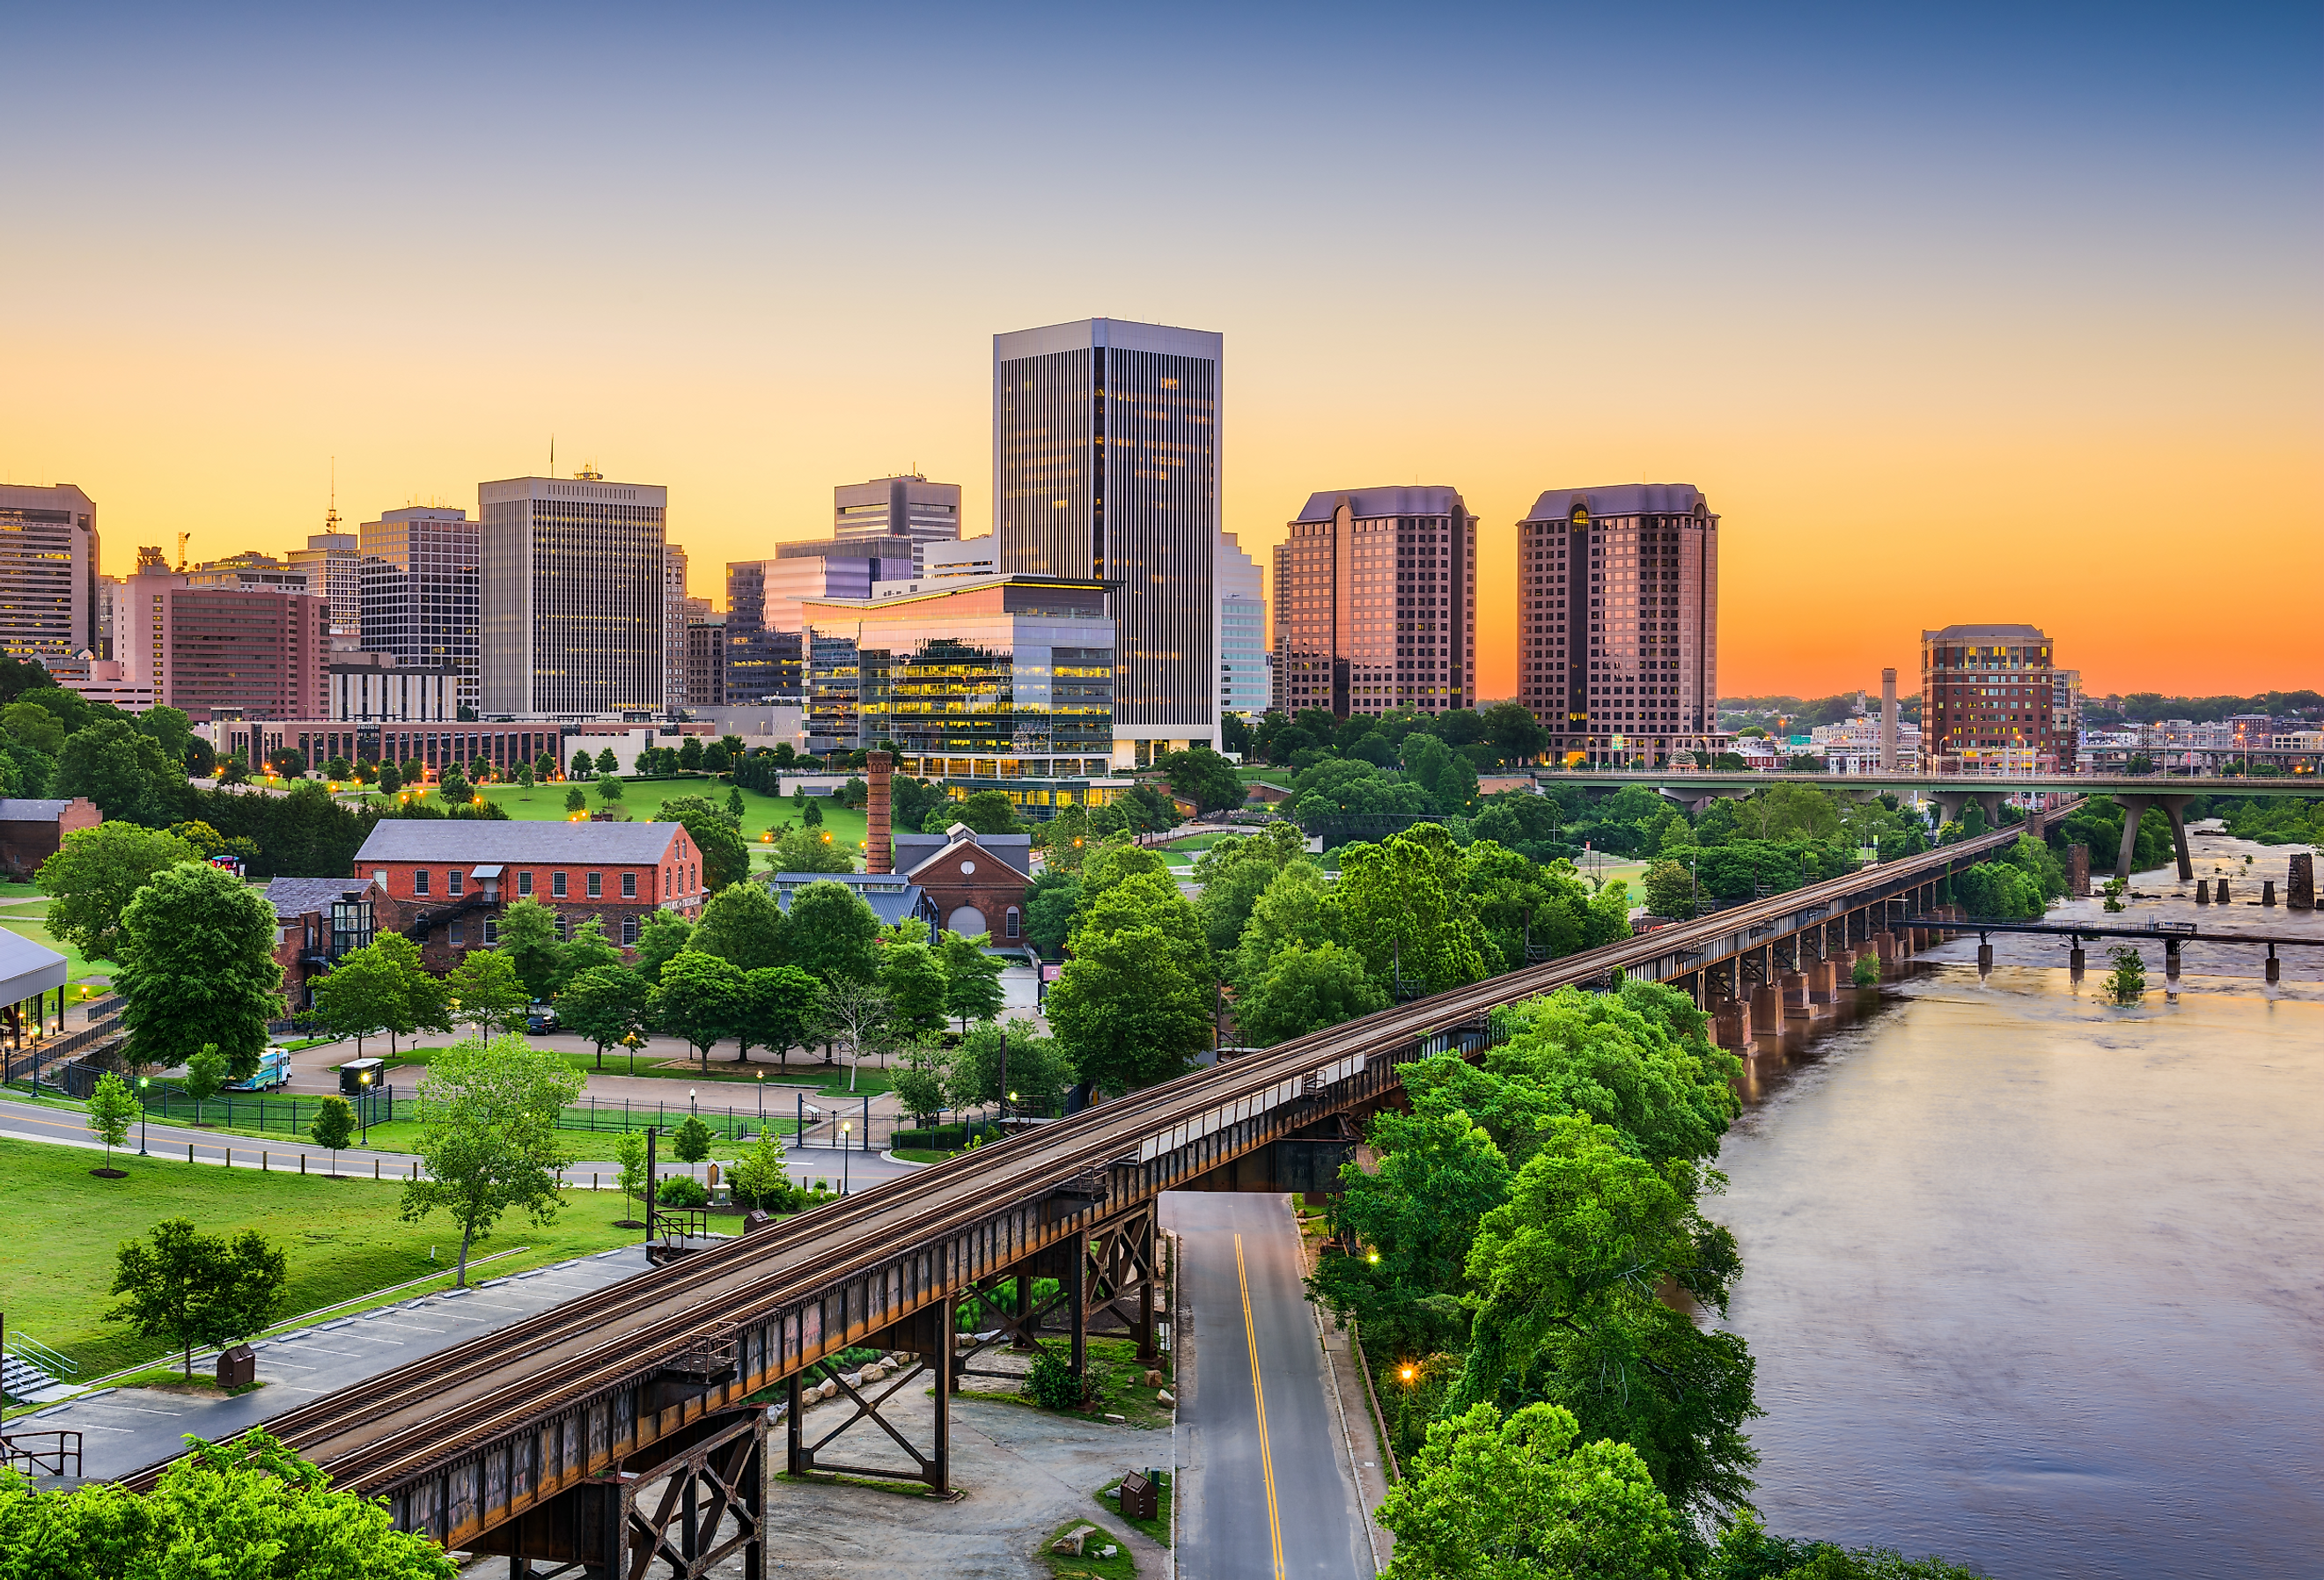 The cityscape of Richmond, Virginia.